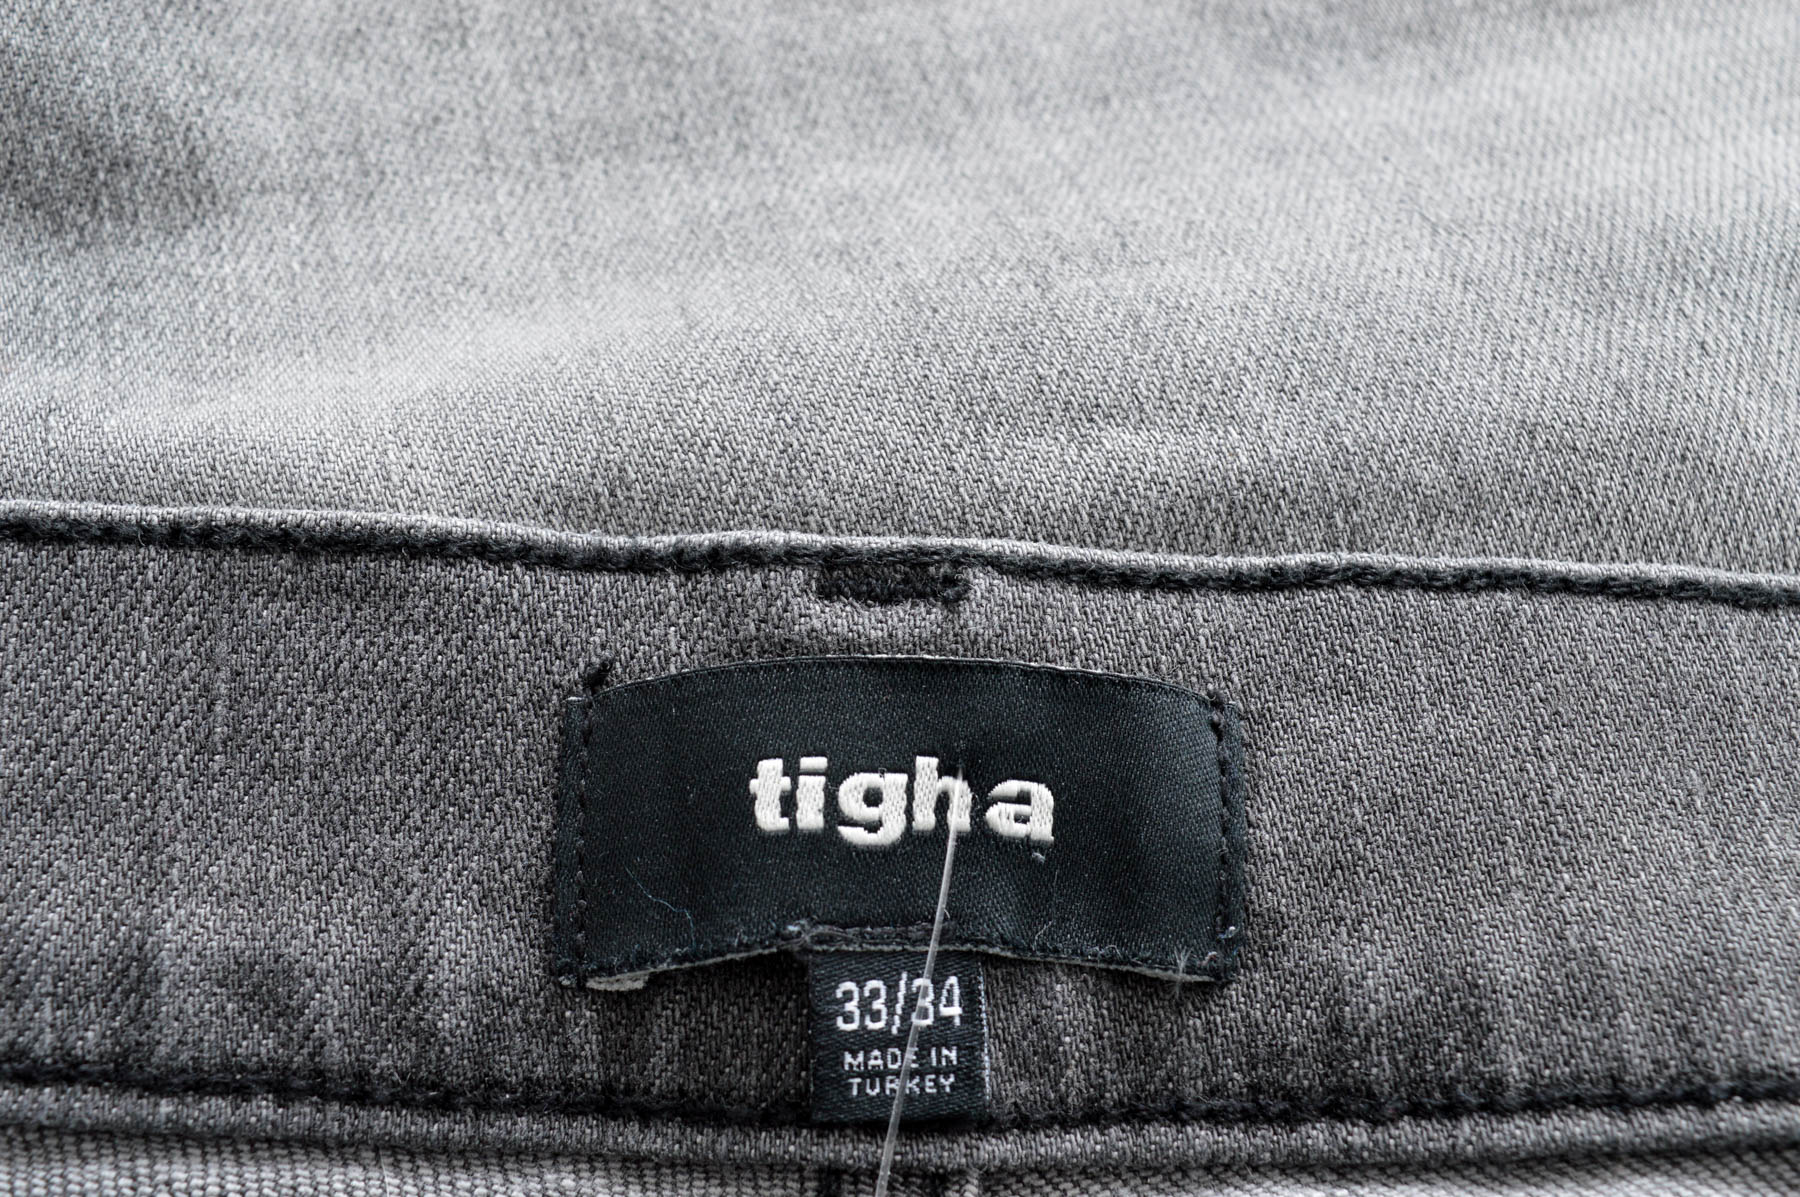 Men's jeans - Tigha - 2